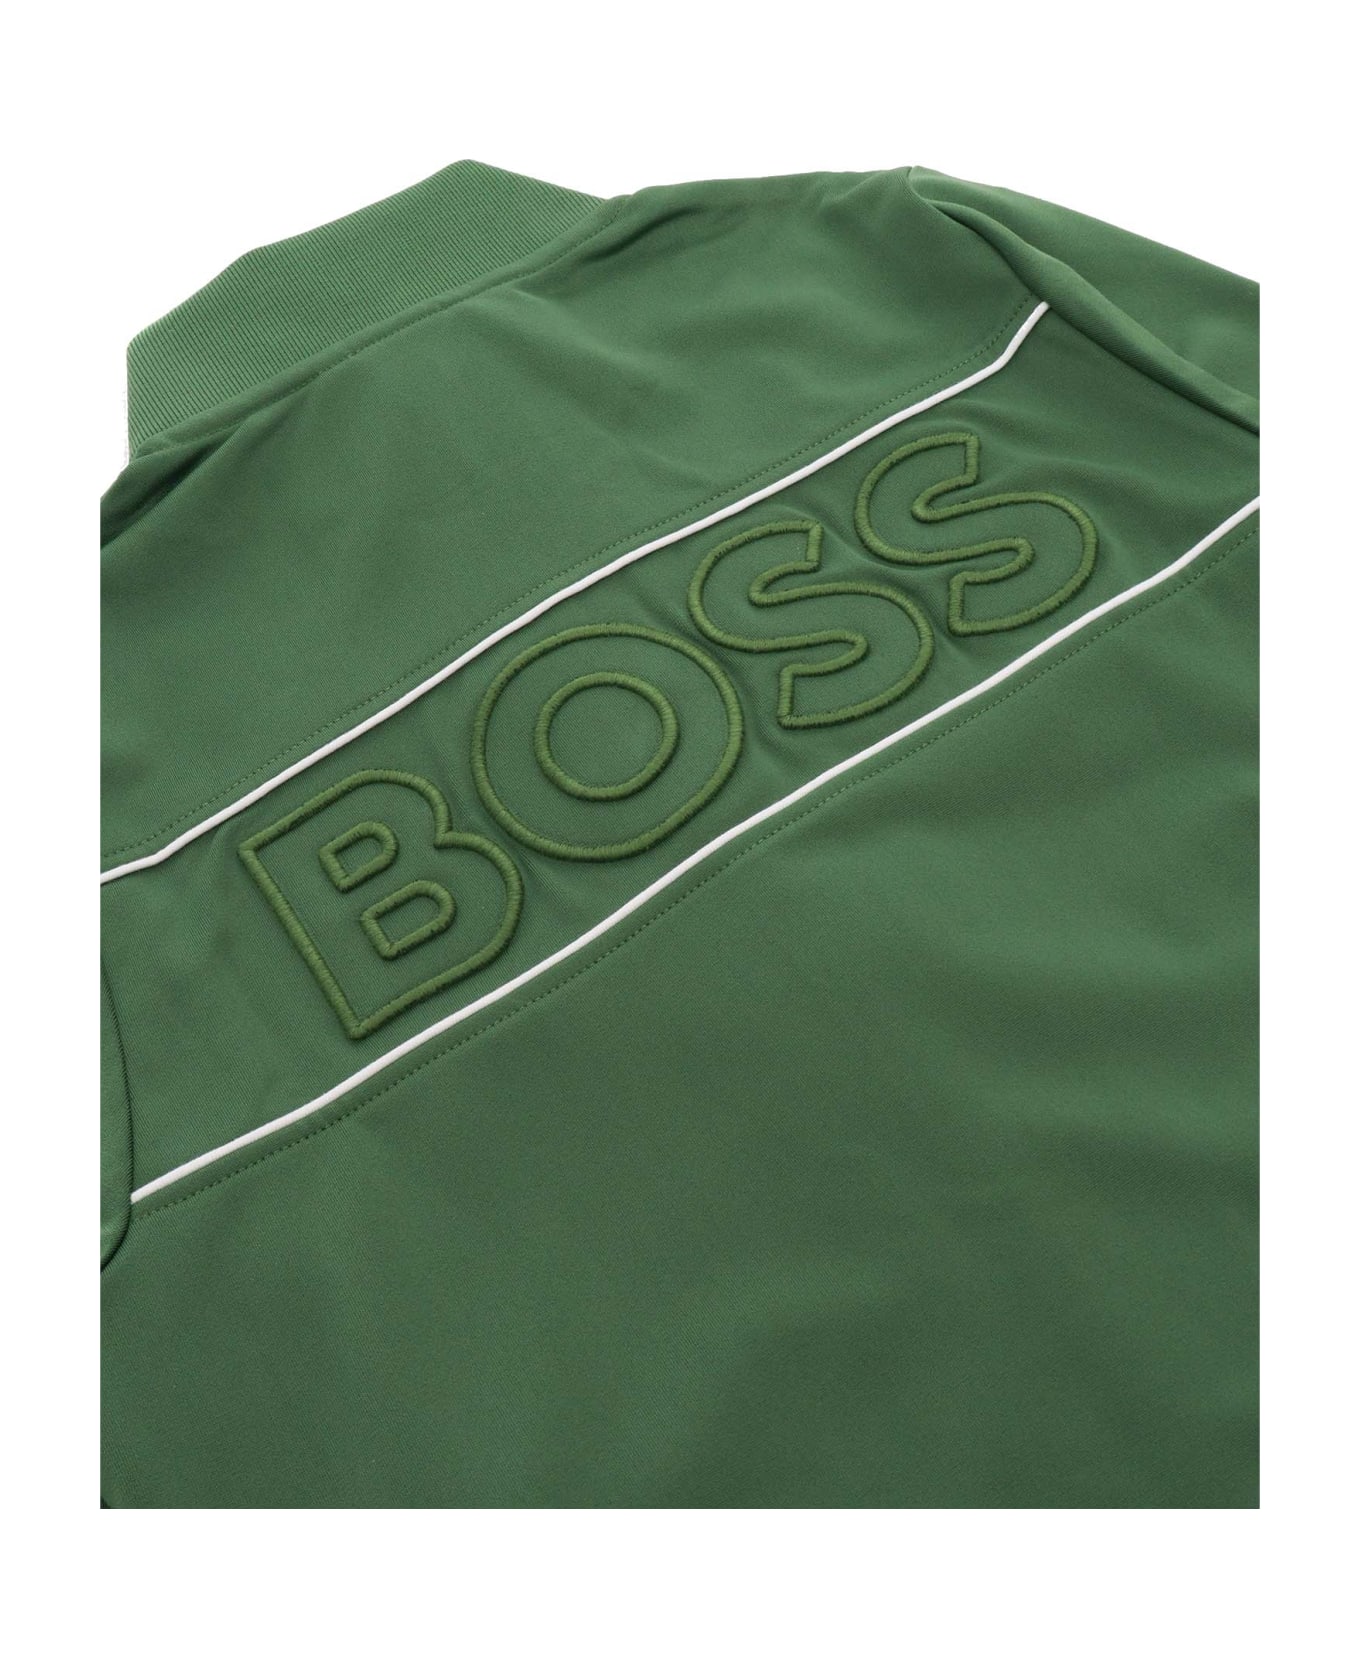 Hugo Boss Green Sweater With Zip Fastening - GREEN